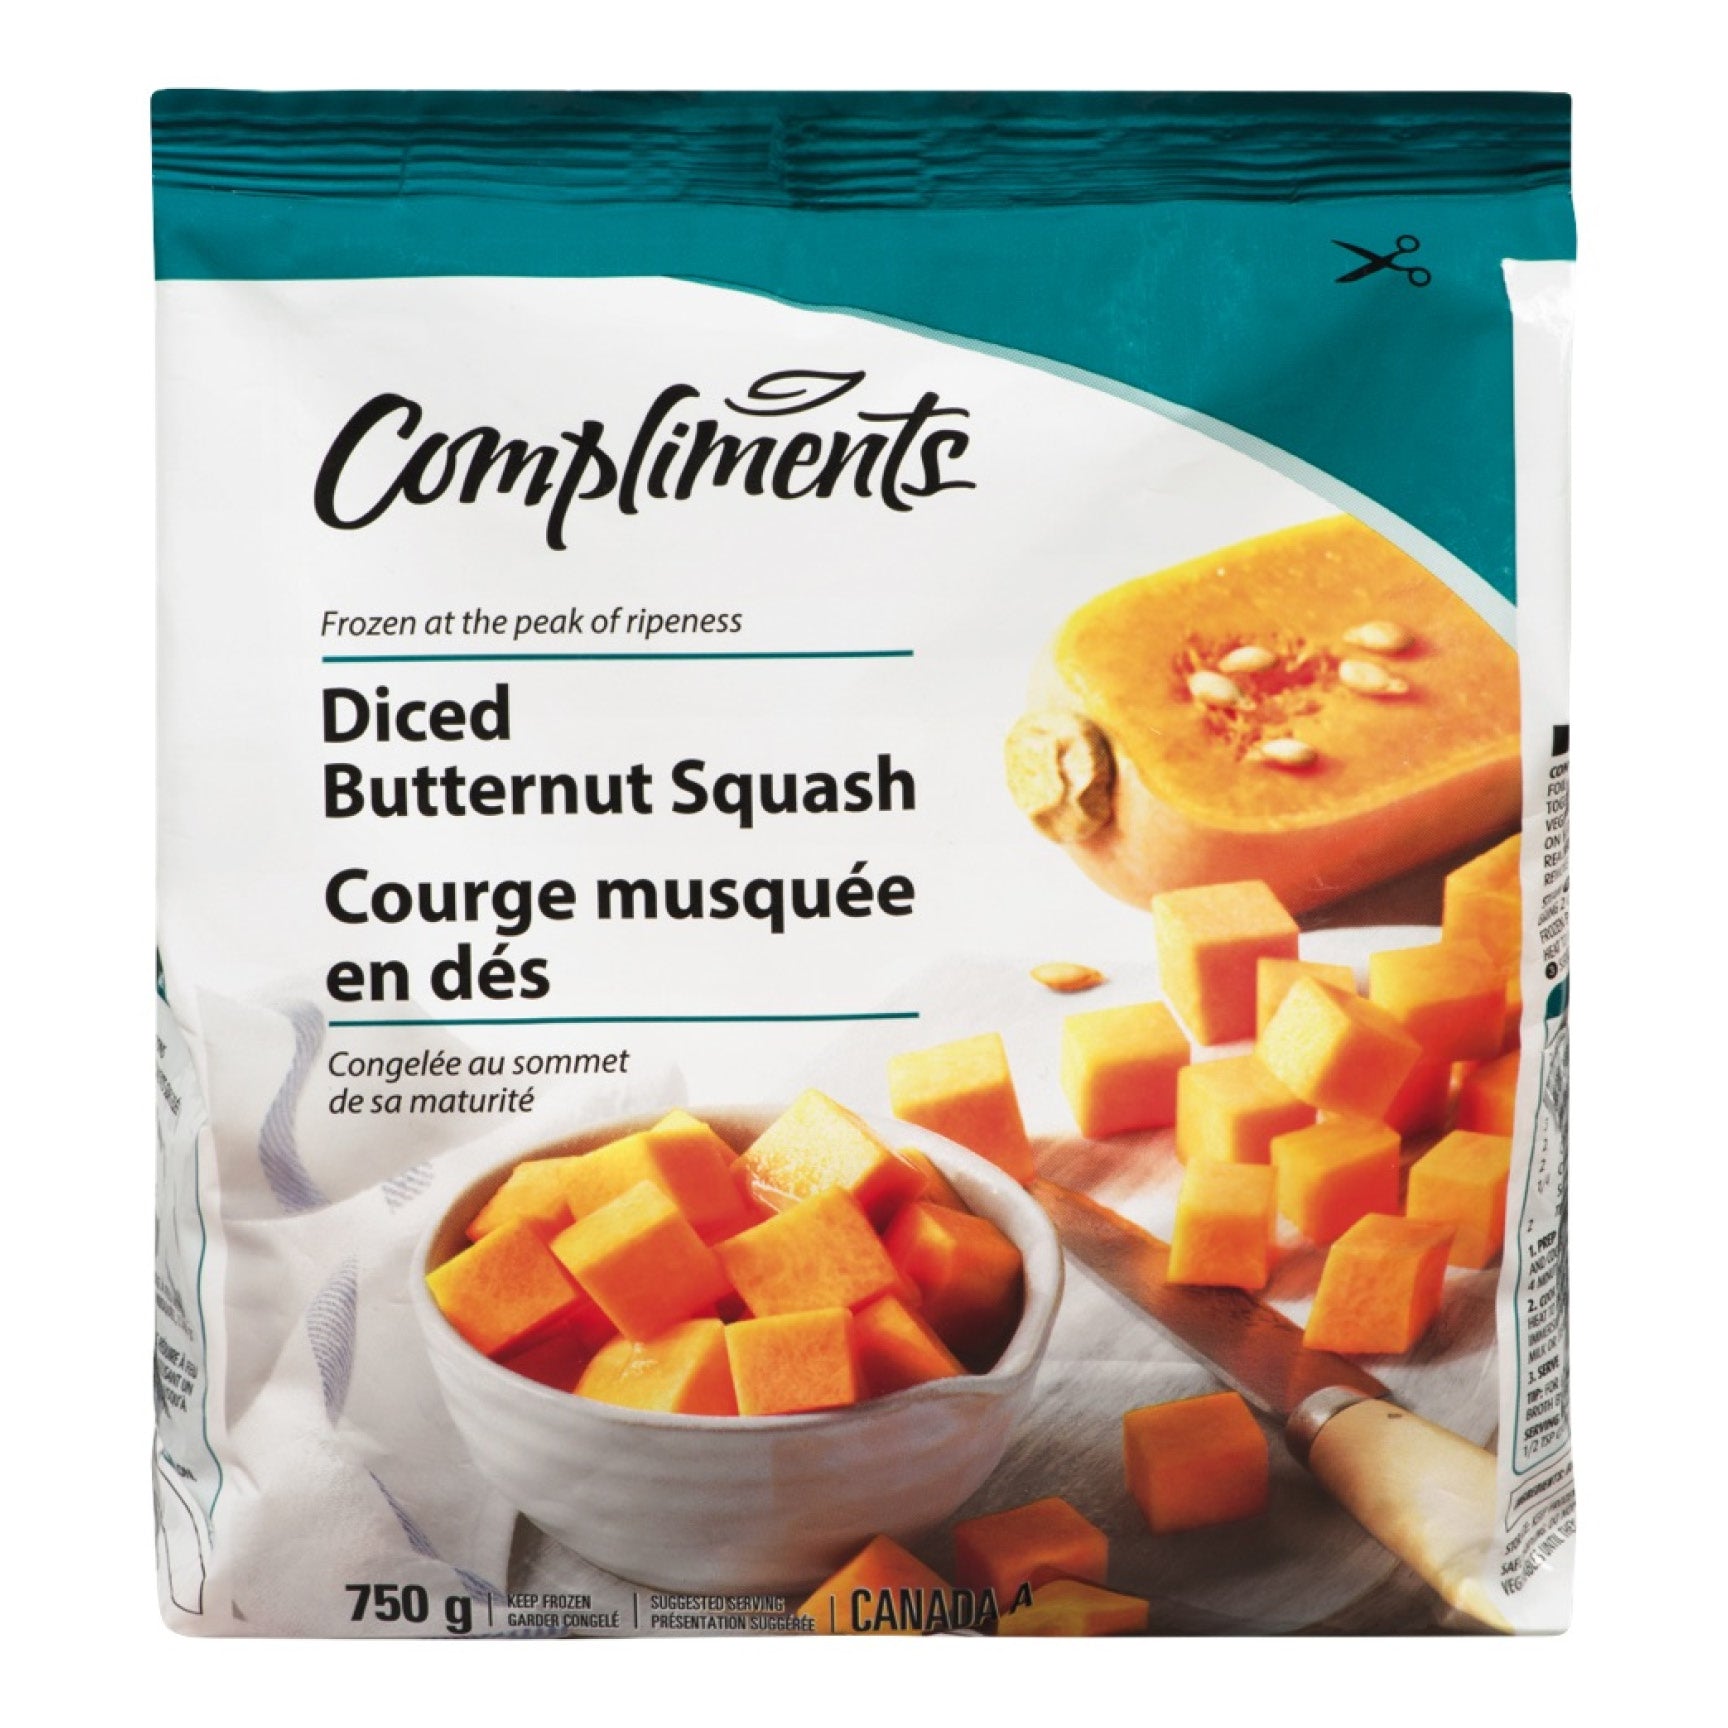 Compliments Frozen Vegetables, Butternut Squash Diced, 750g